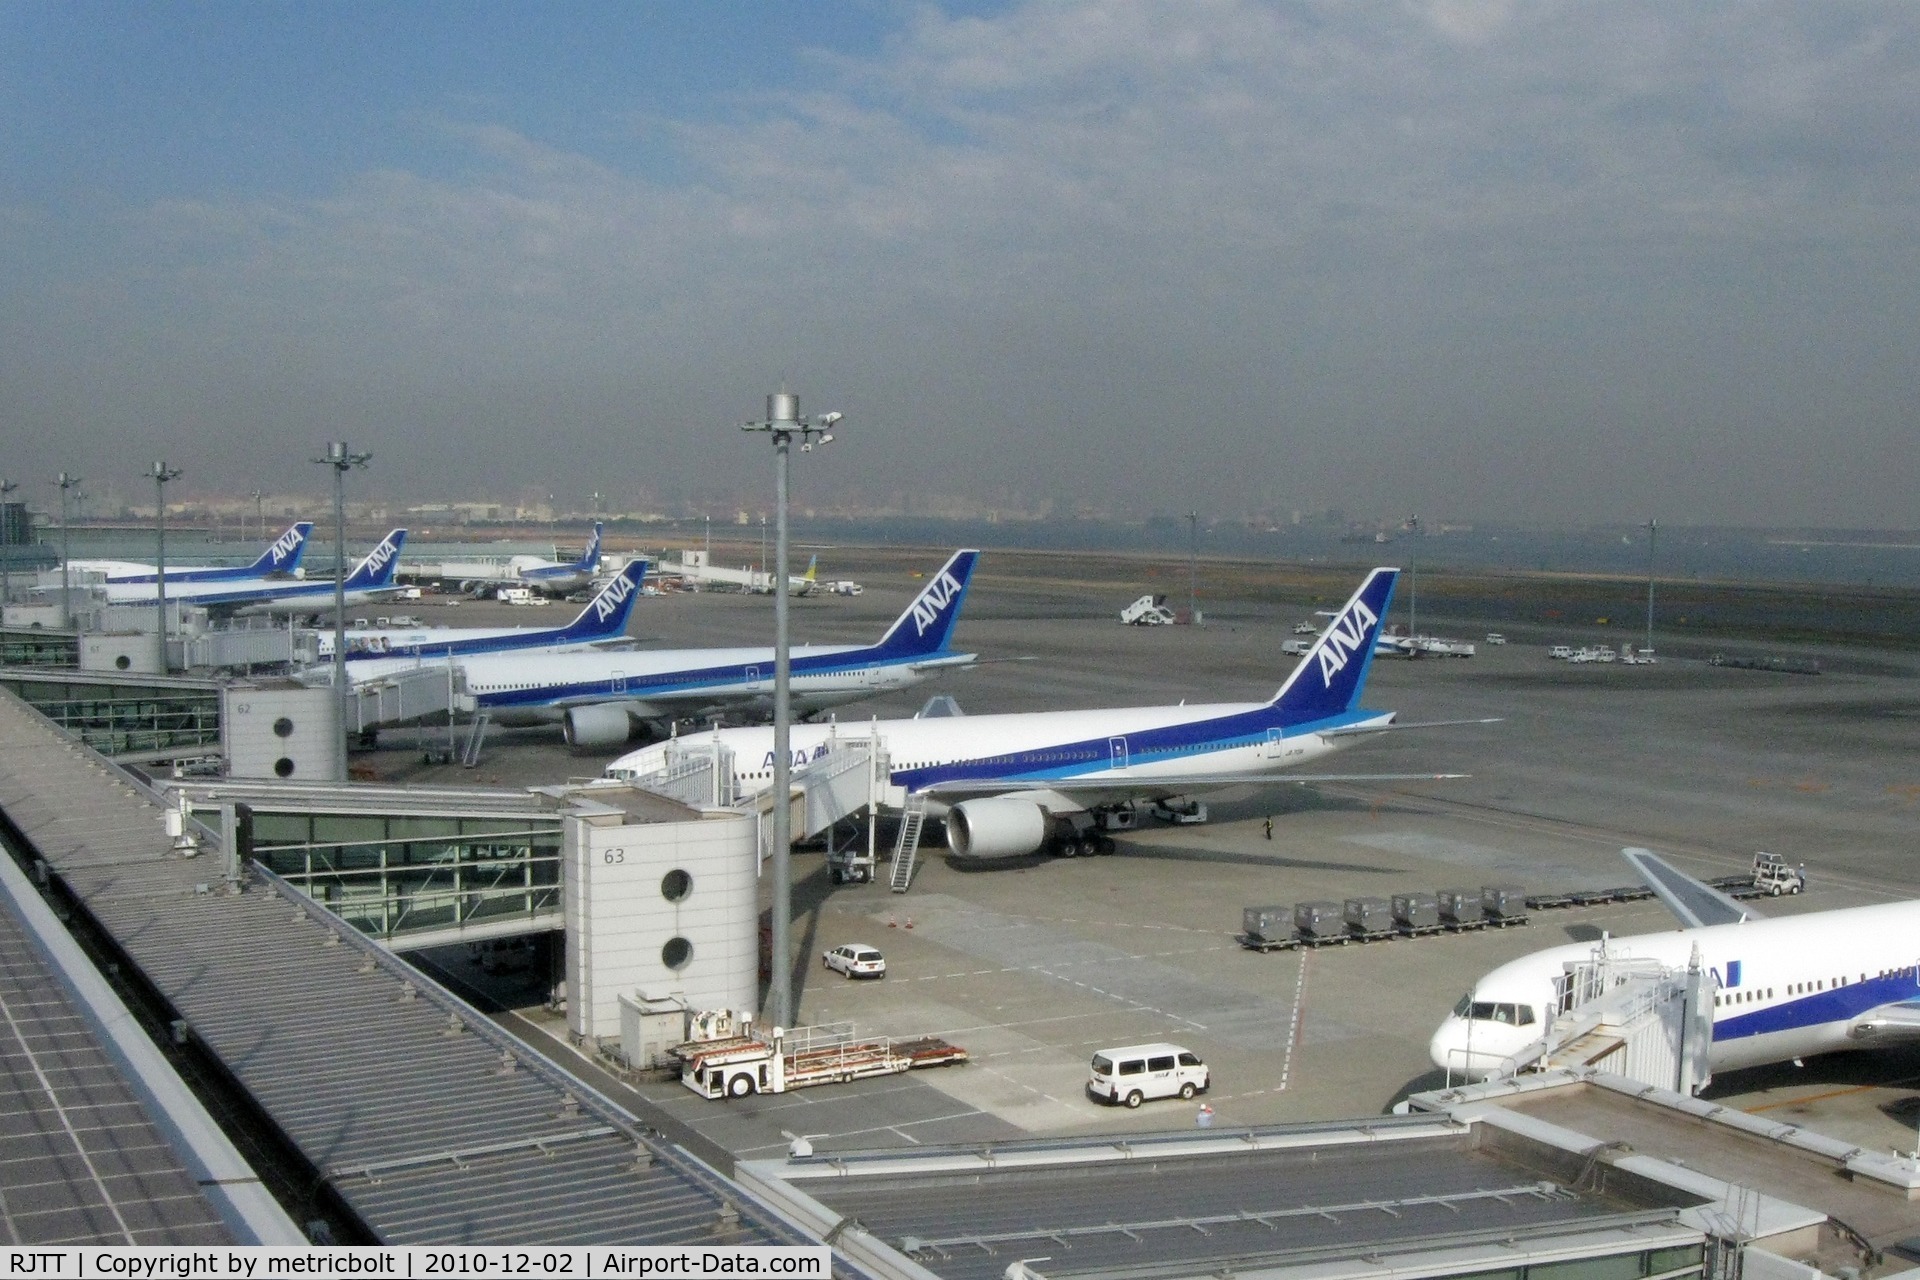 Tokyo International Airport (Haneda), Ota, Tokyo Japan (RJTT) - ANA fleet at Tokyo Haneda airport